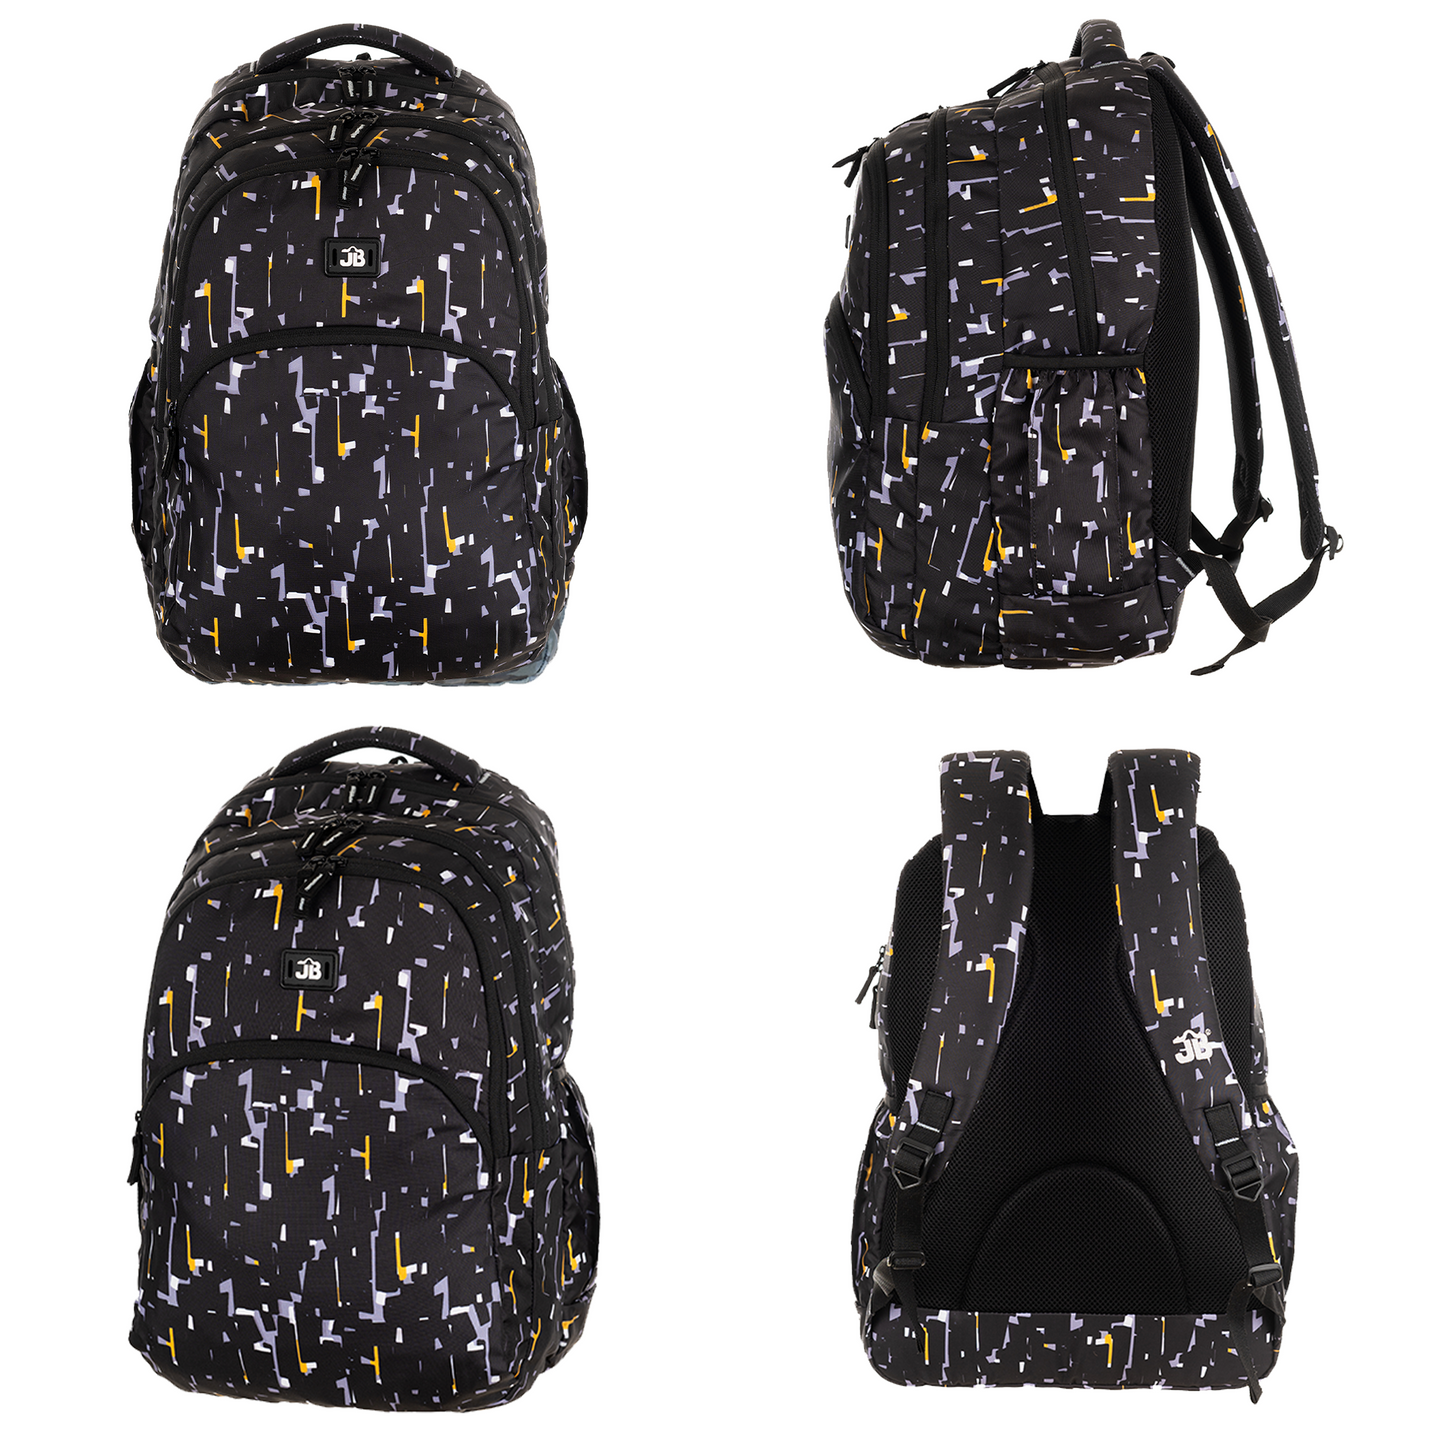 Blackline Voyager School/College Backpack - 19 Inch (Black)